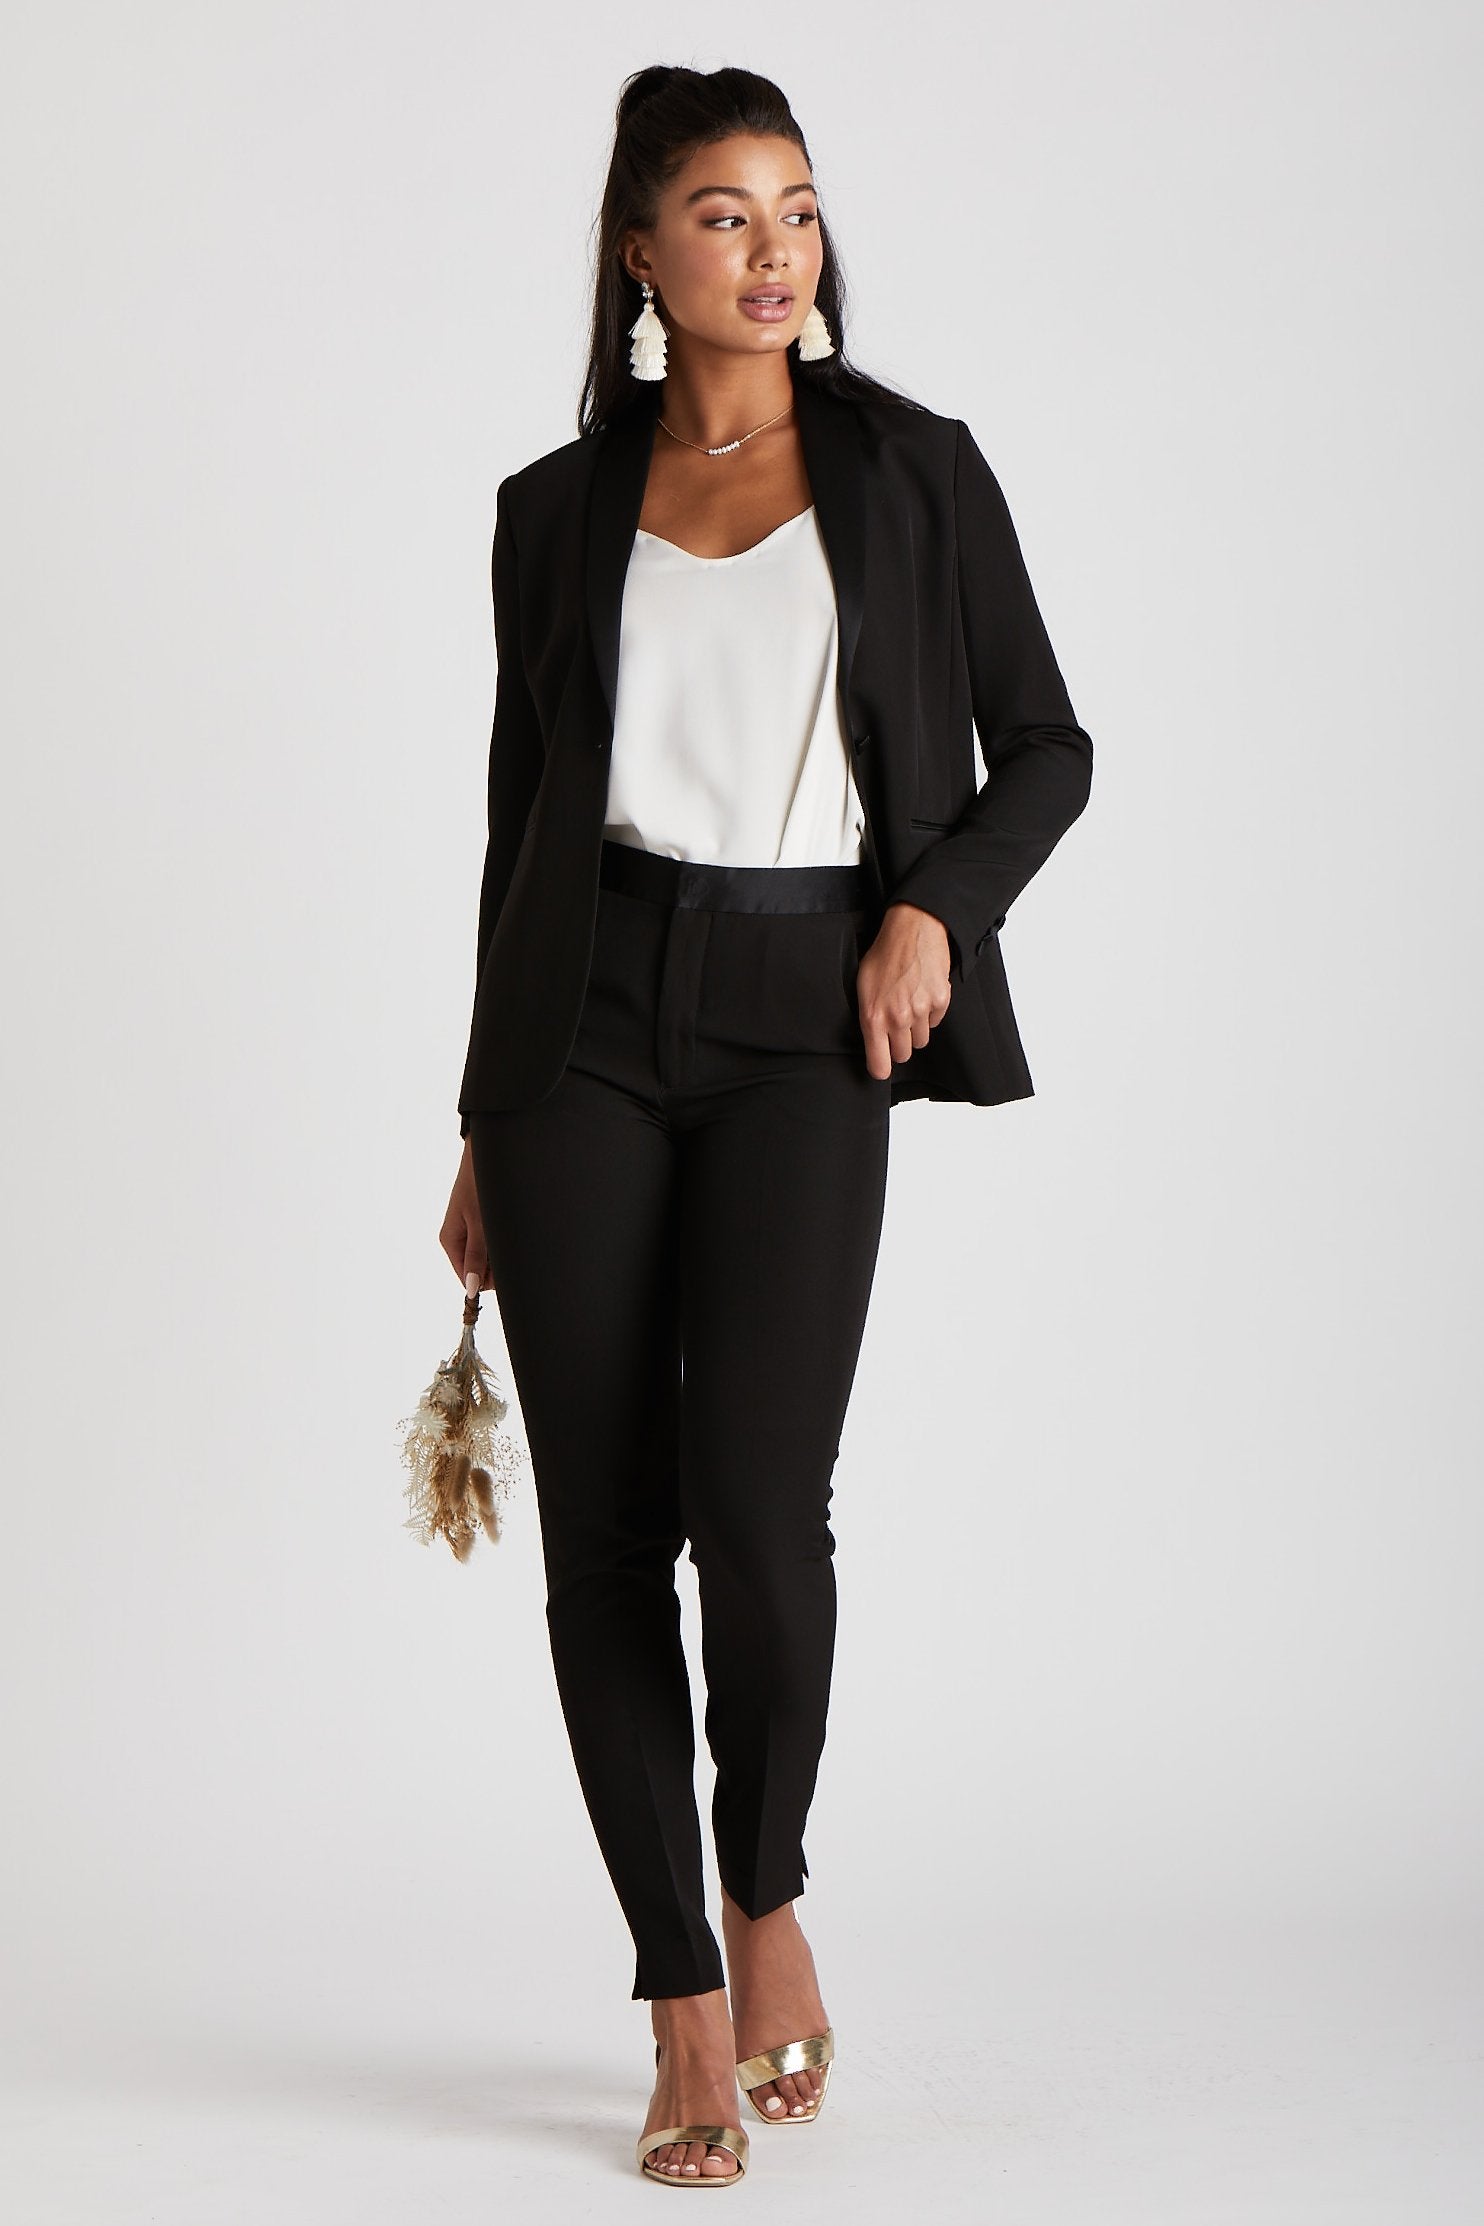 Women's Black Tuxedo Jacket by SuitShop